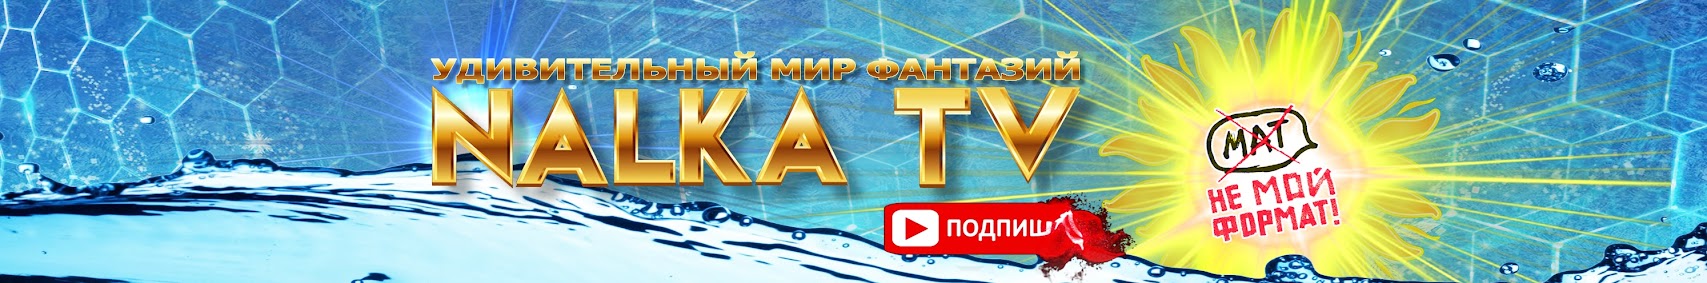 Nalka TV